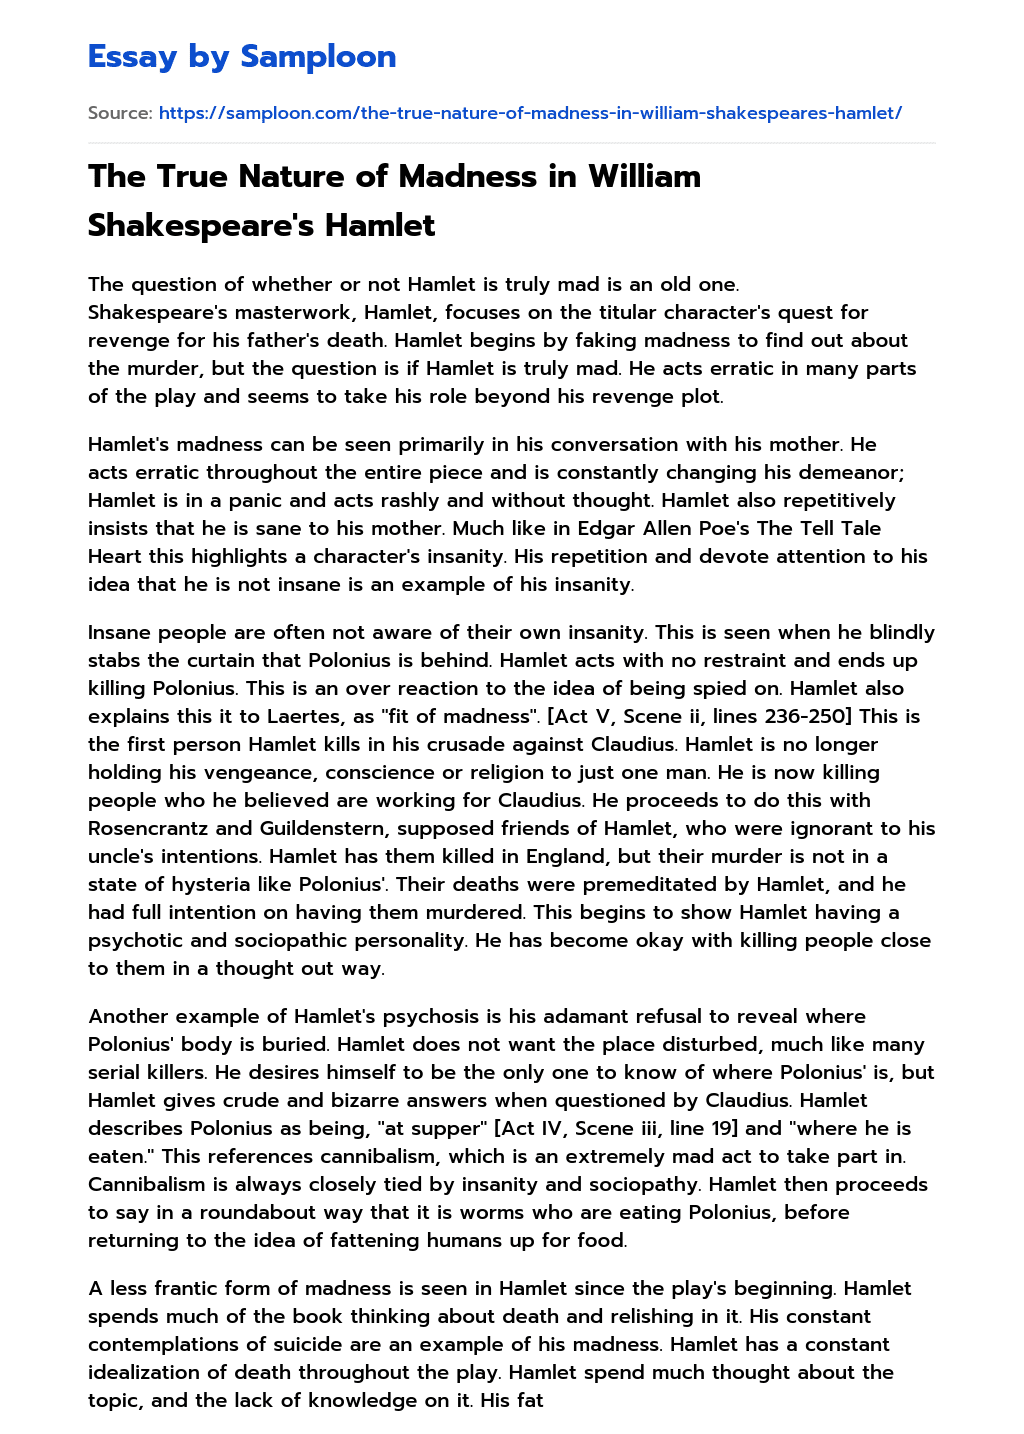 The True Nature of Madness in William Shakespeare’s Hamlet essay